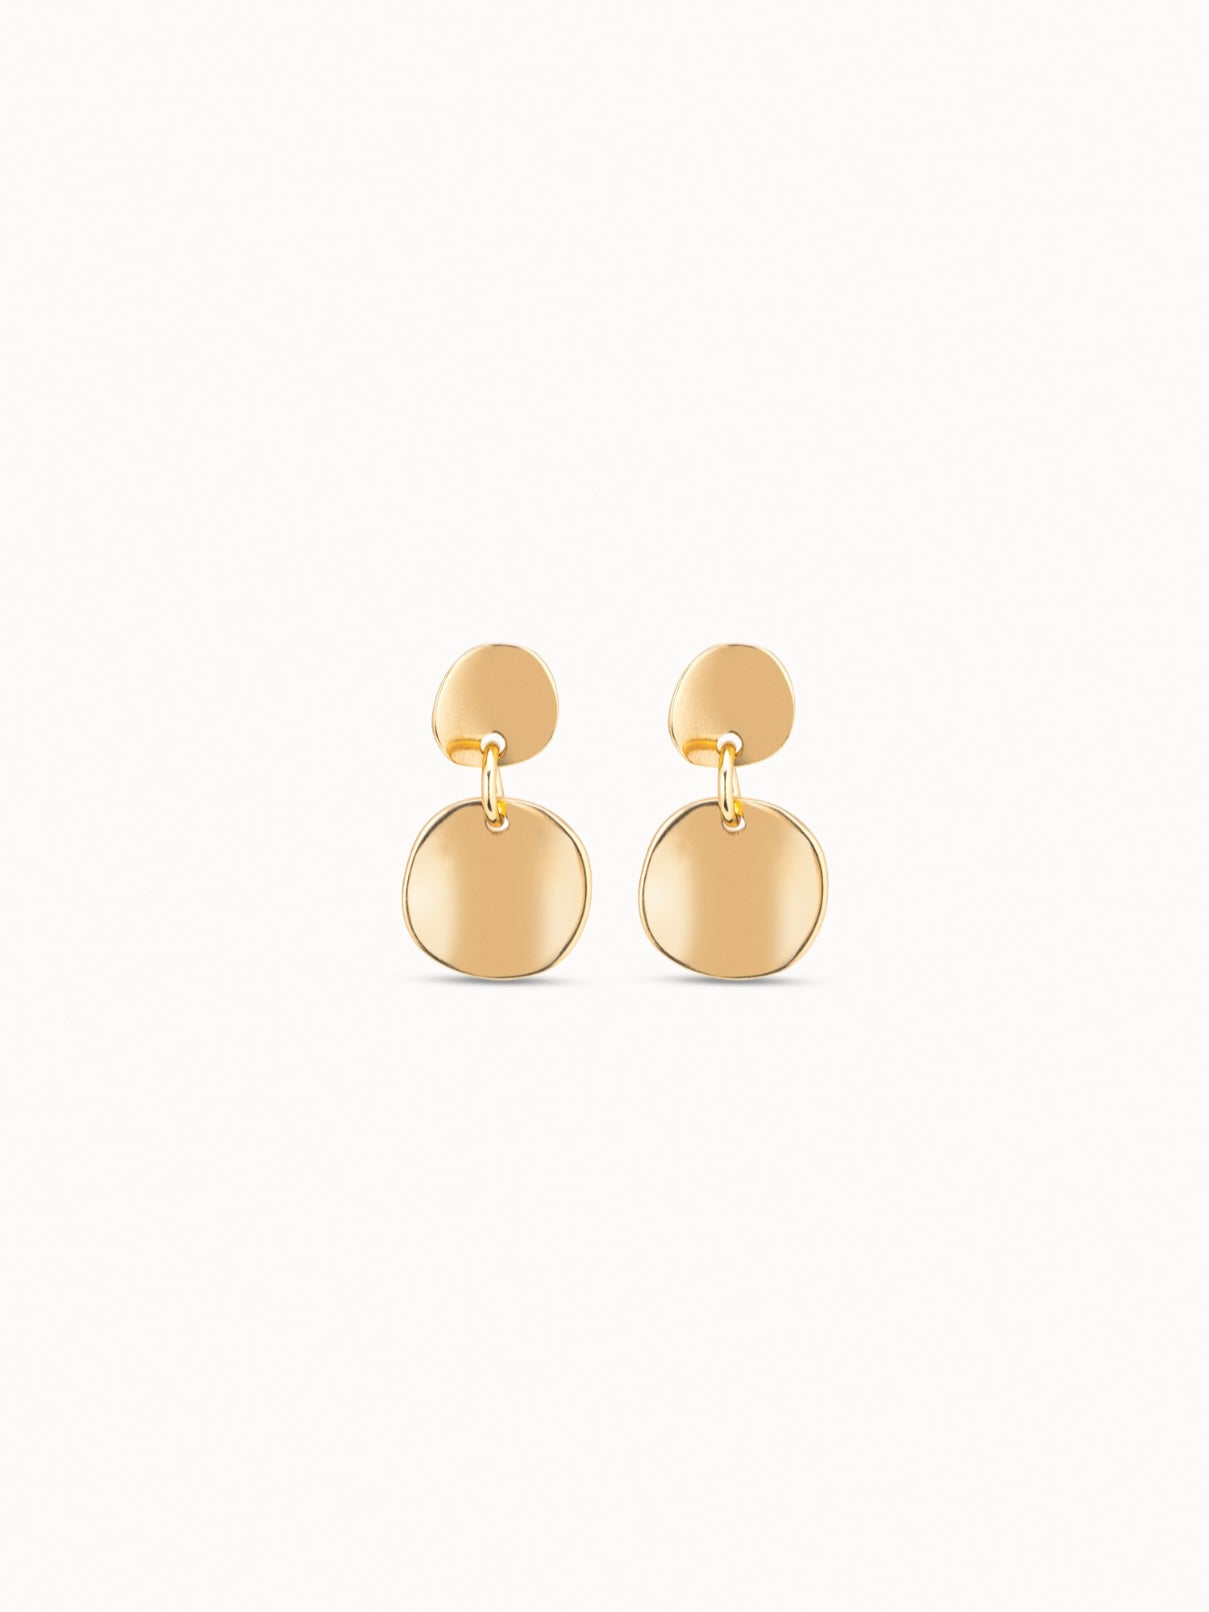 Scales Earrings - Gold